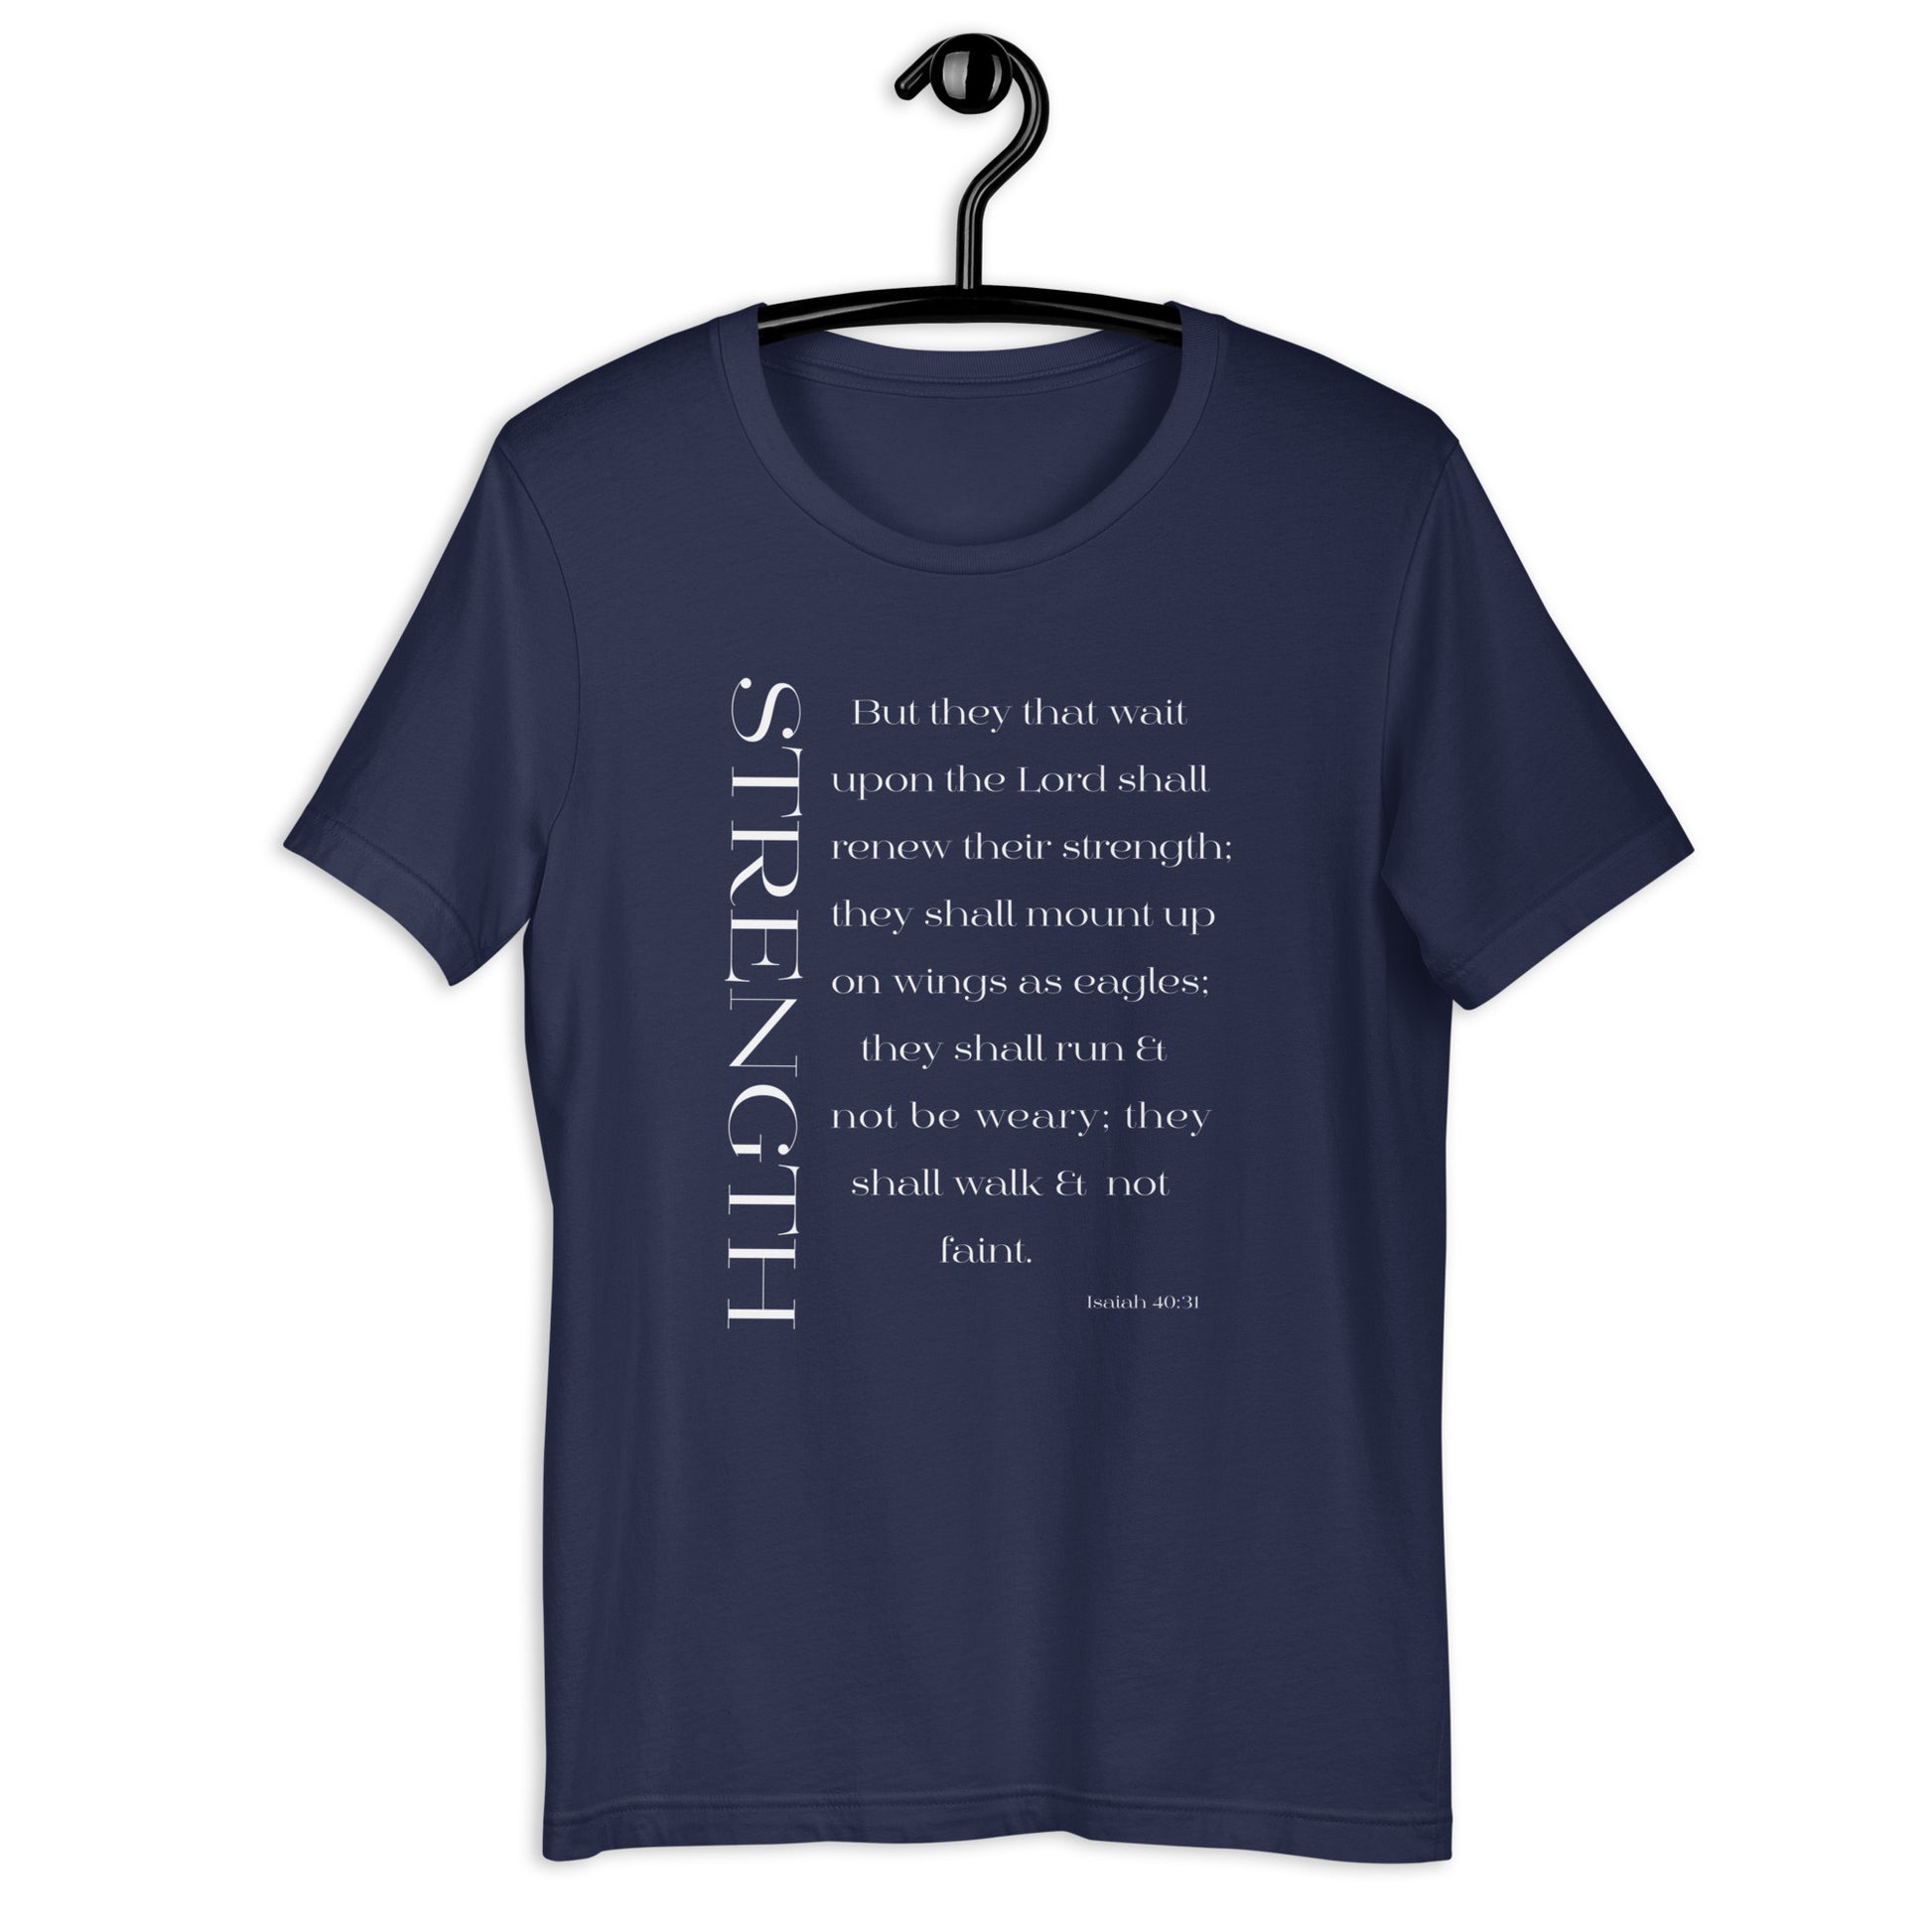 Isaiah 40:31 Strength Short-Sleeve Unisex T-Shirt navy on hanger